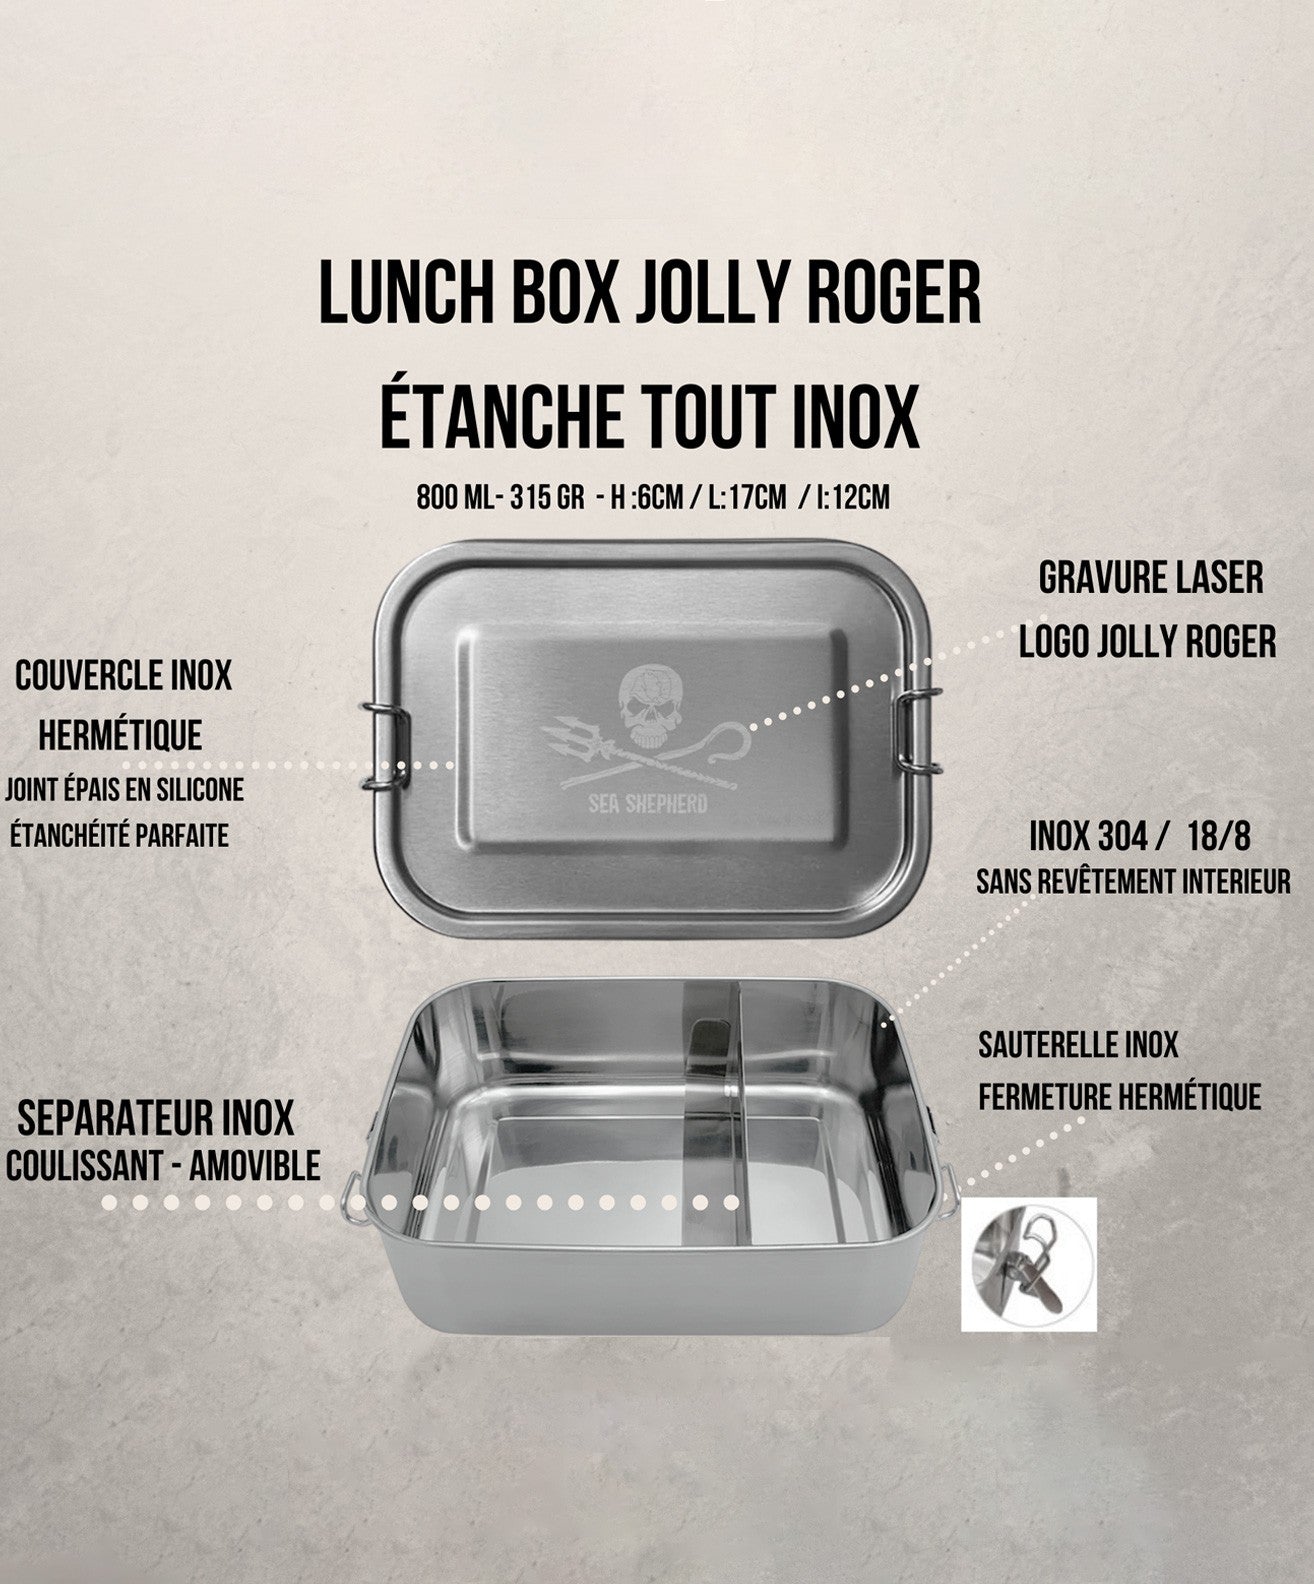 Lunch Box Sea Shepherd 800ml